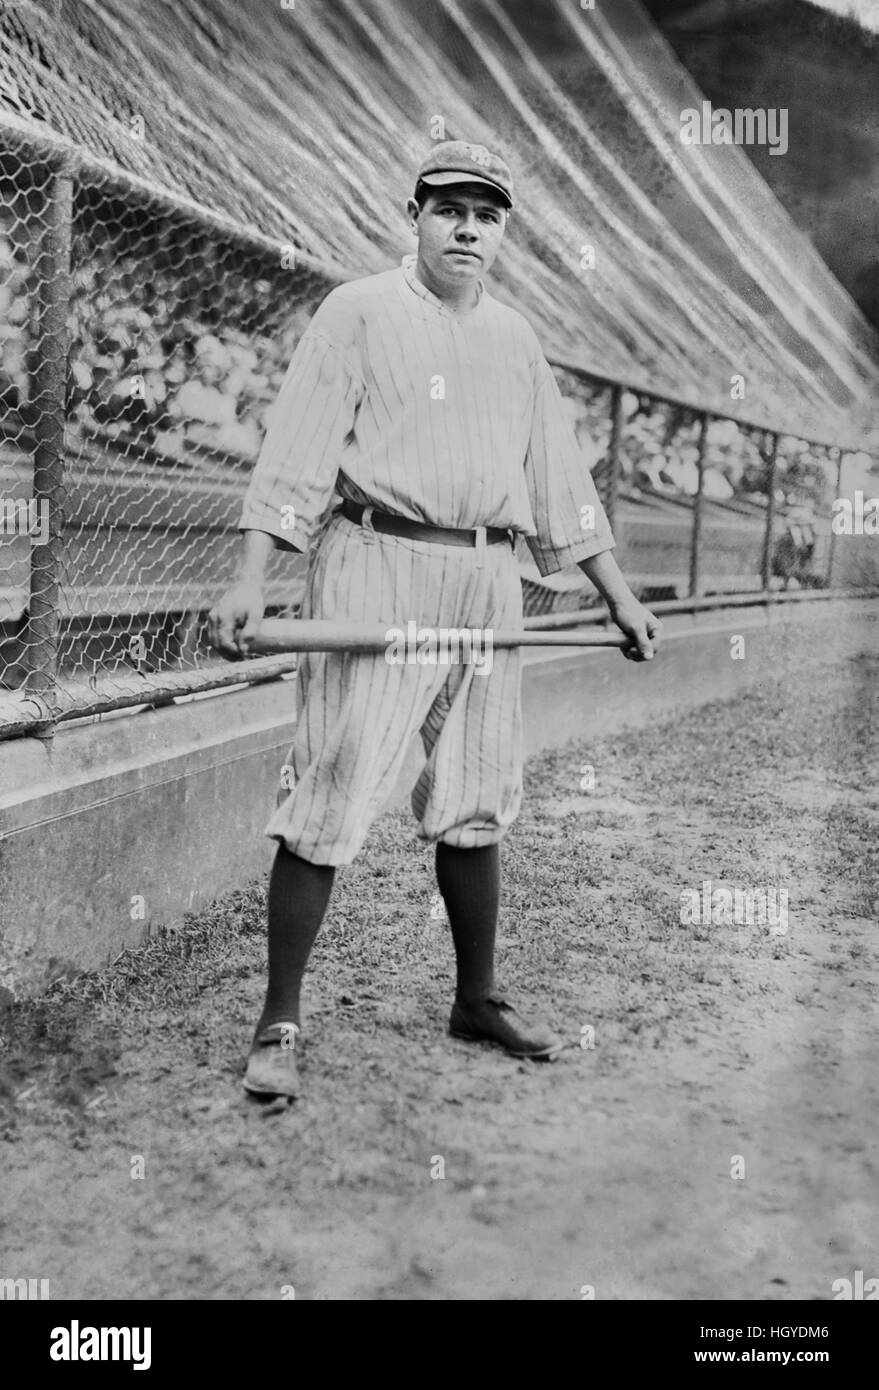 Babe Ruth, Major League Baseball Player, New York Yankees, Portrait, Bain News Service, 1921 Stock Photo